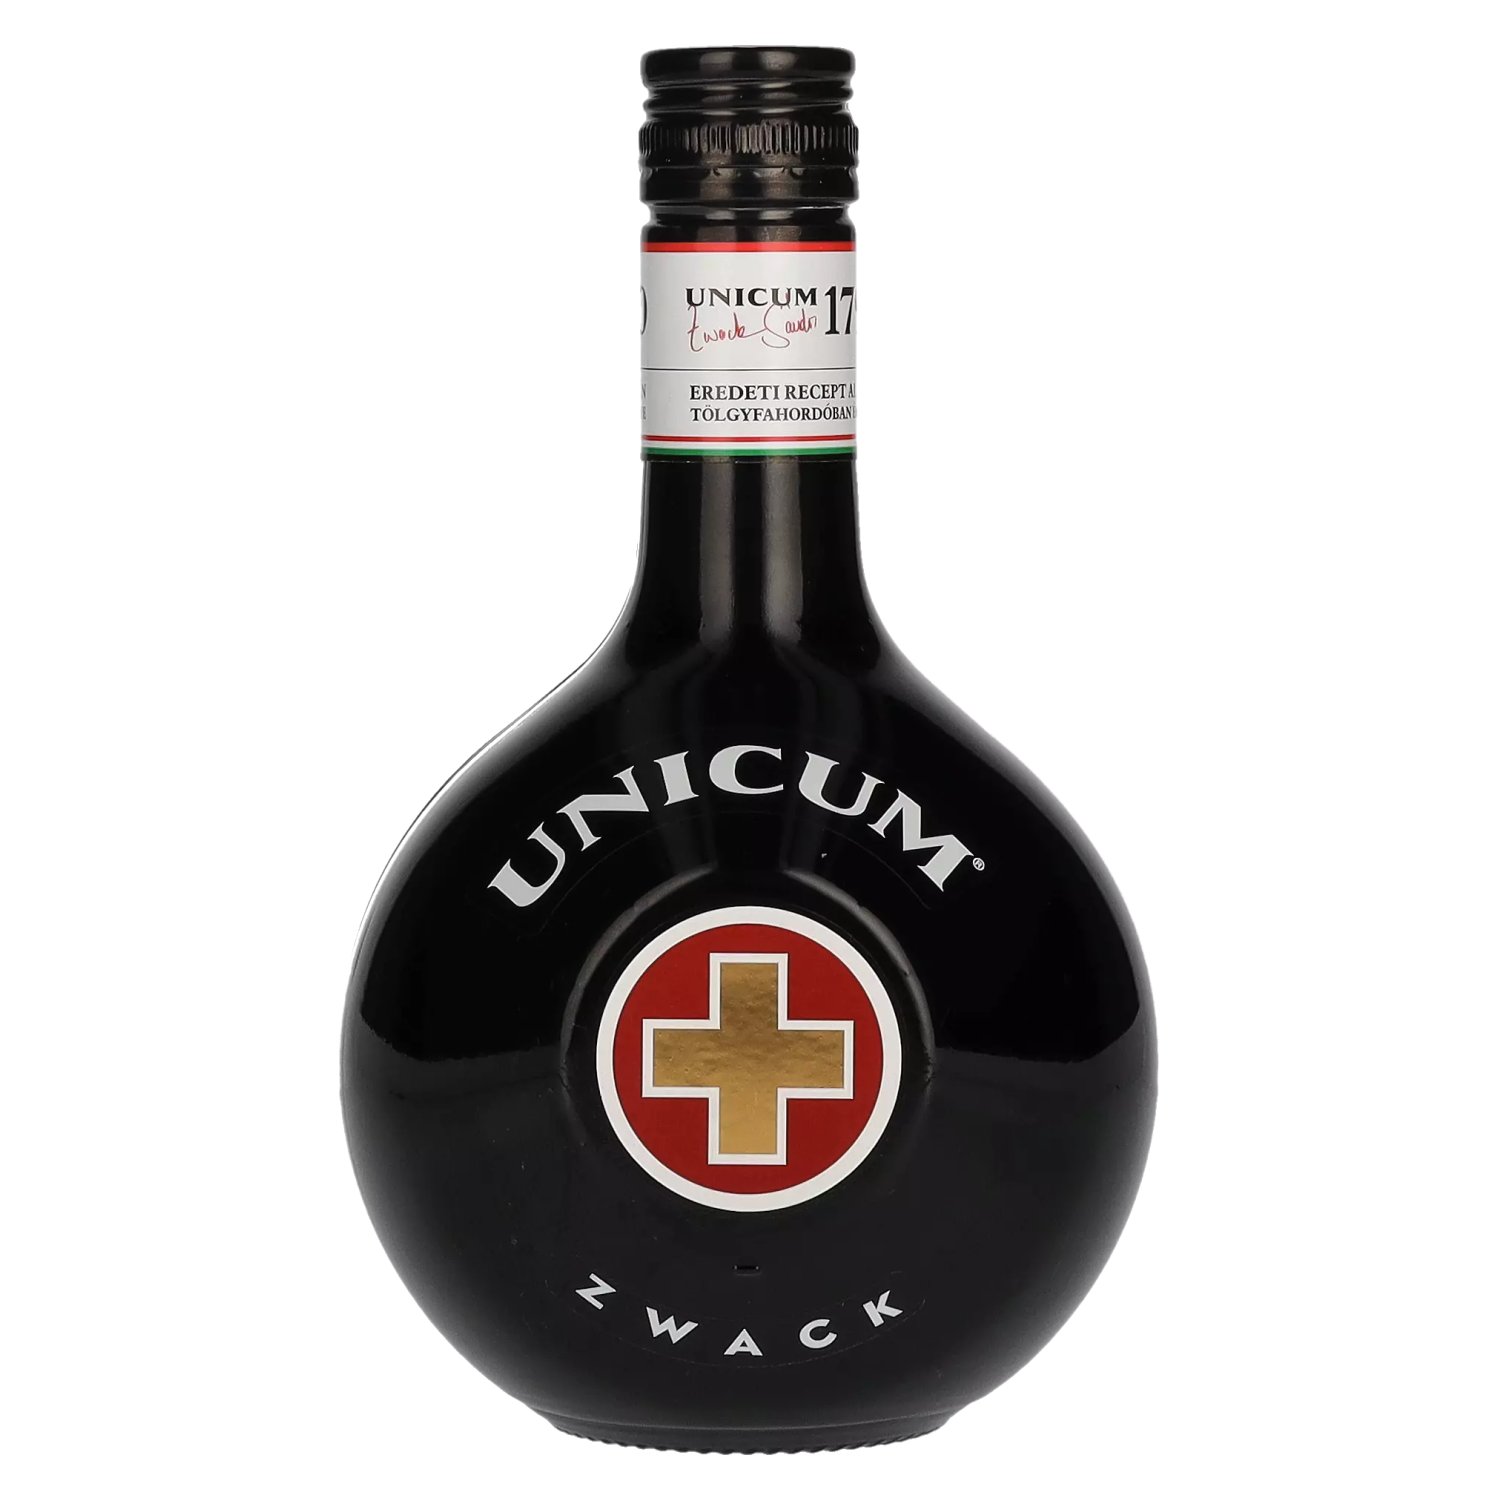 Zwack Unicum 40% Vol. 0,7l delicando 